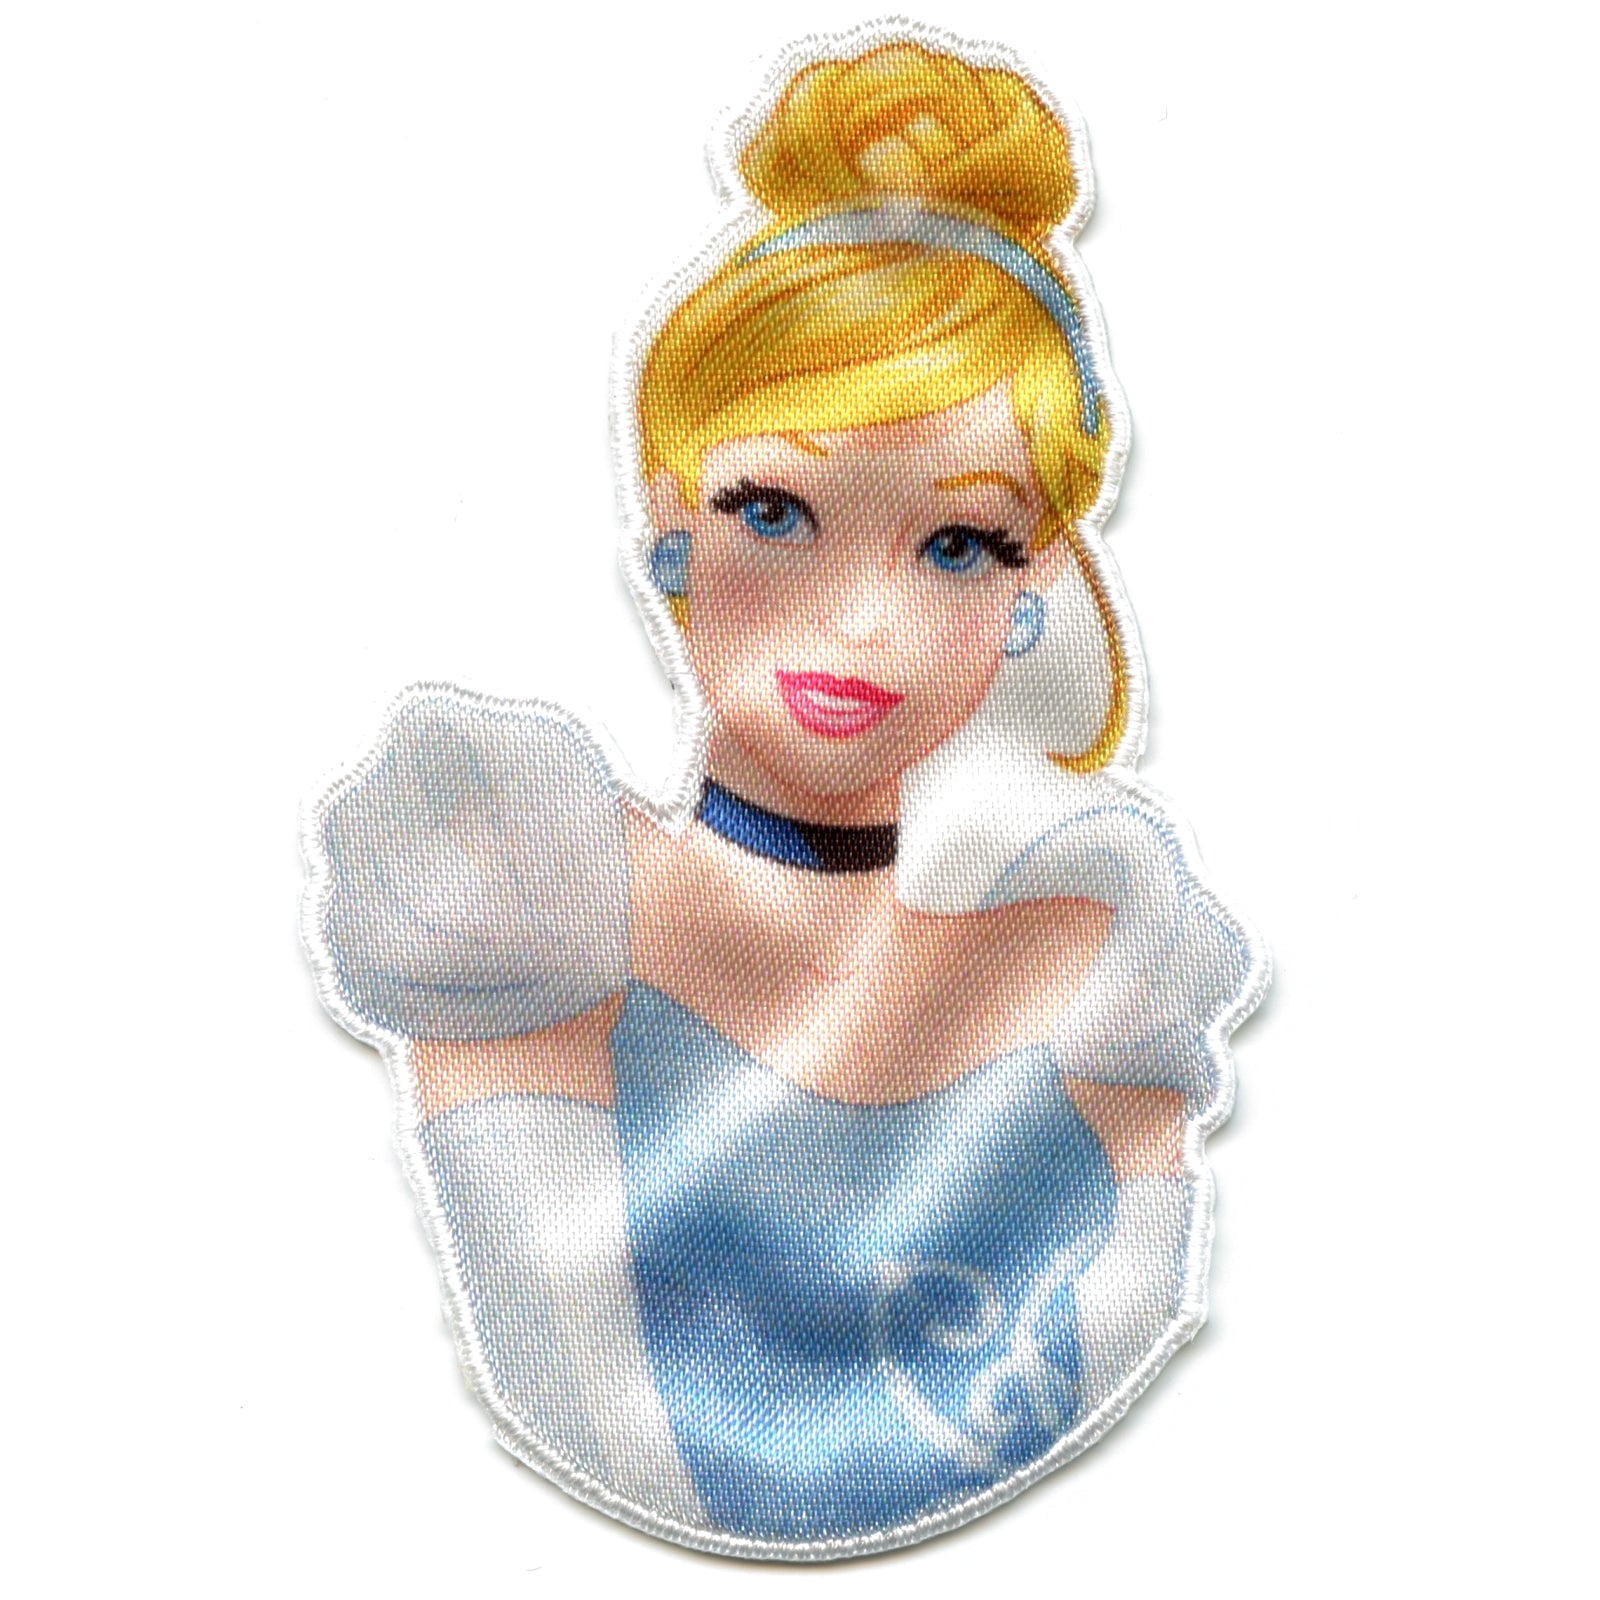 Officially Licensed Disney Princess Cinderella Portrait Iron on Applique FotoPatch 